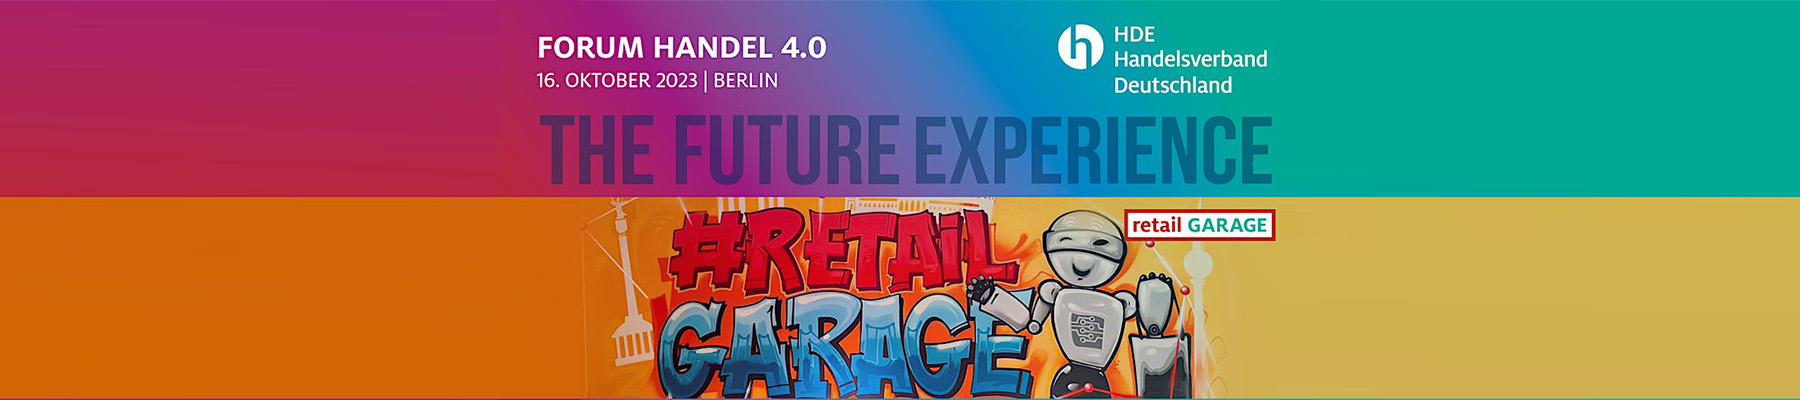 HDE Forum Handel 4.0 - The Future Experience